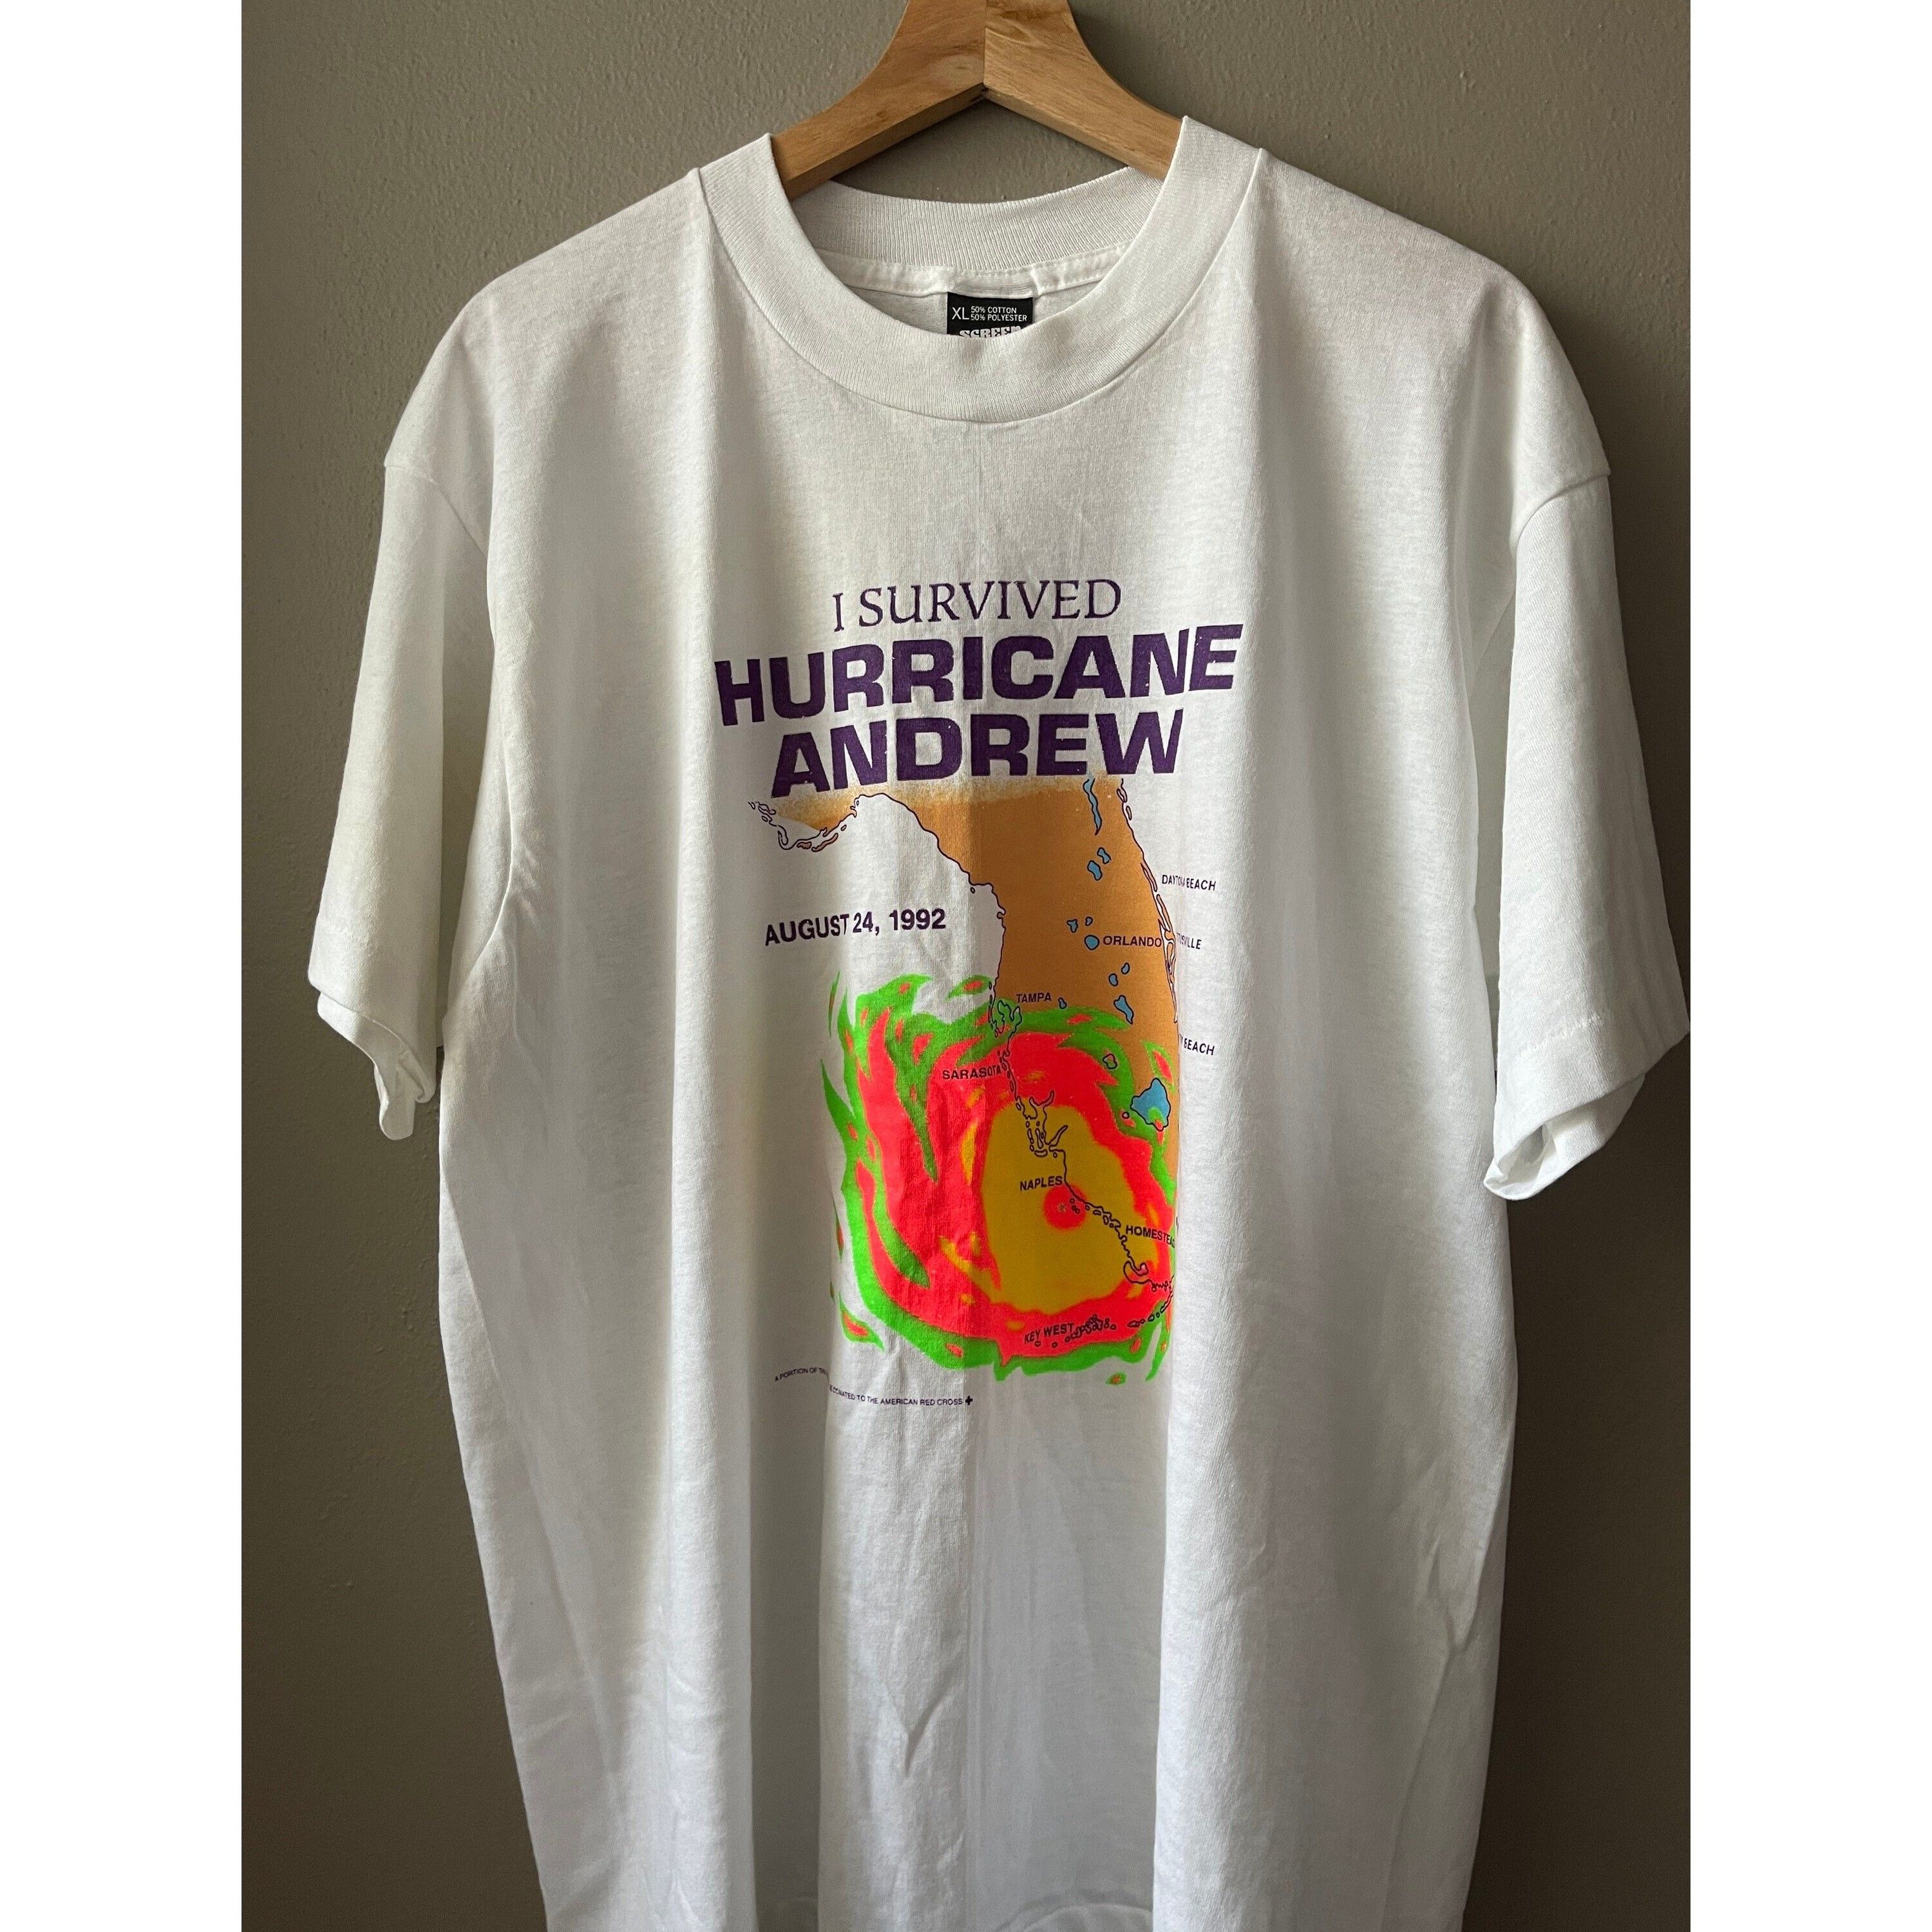 Vintage Vintage 1992 I Survived Hurricane Andrew Single Stitch Tee Size US XL / EU 56 / 4 - 1 Preview